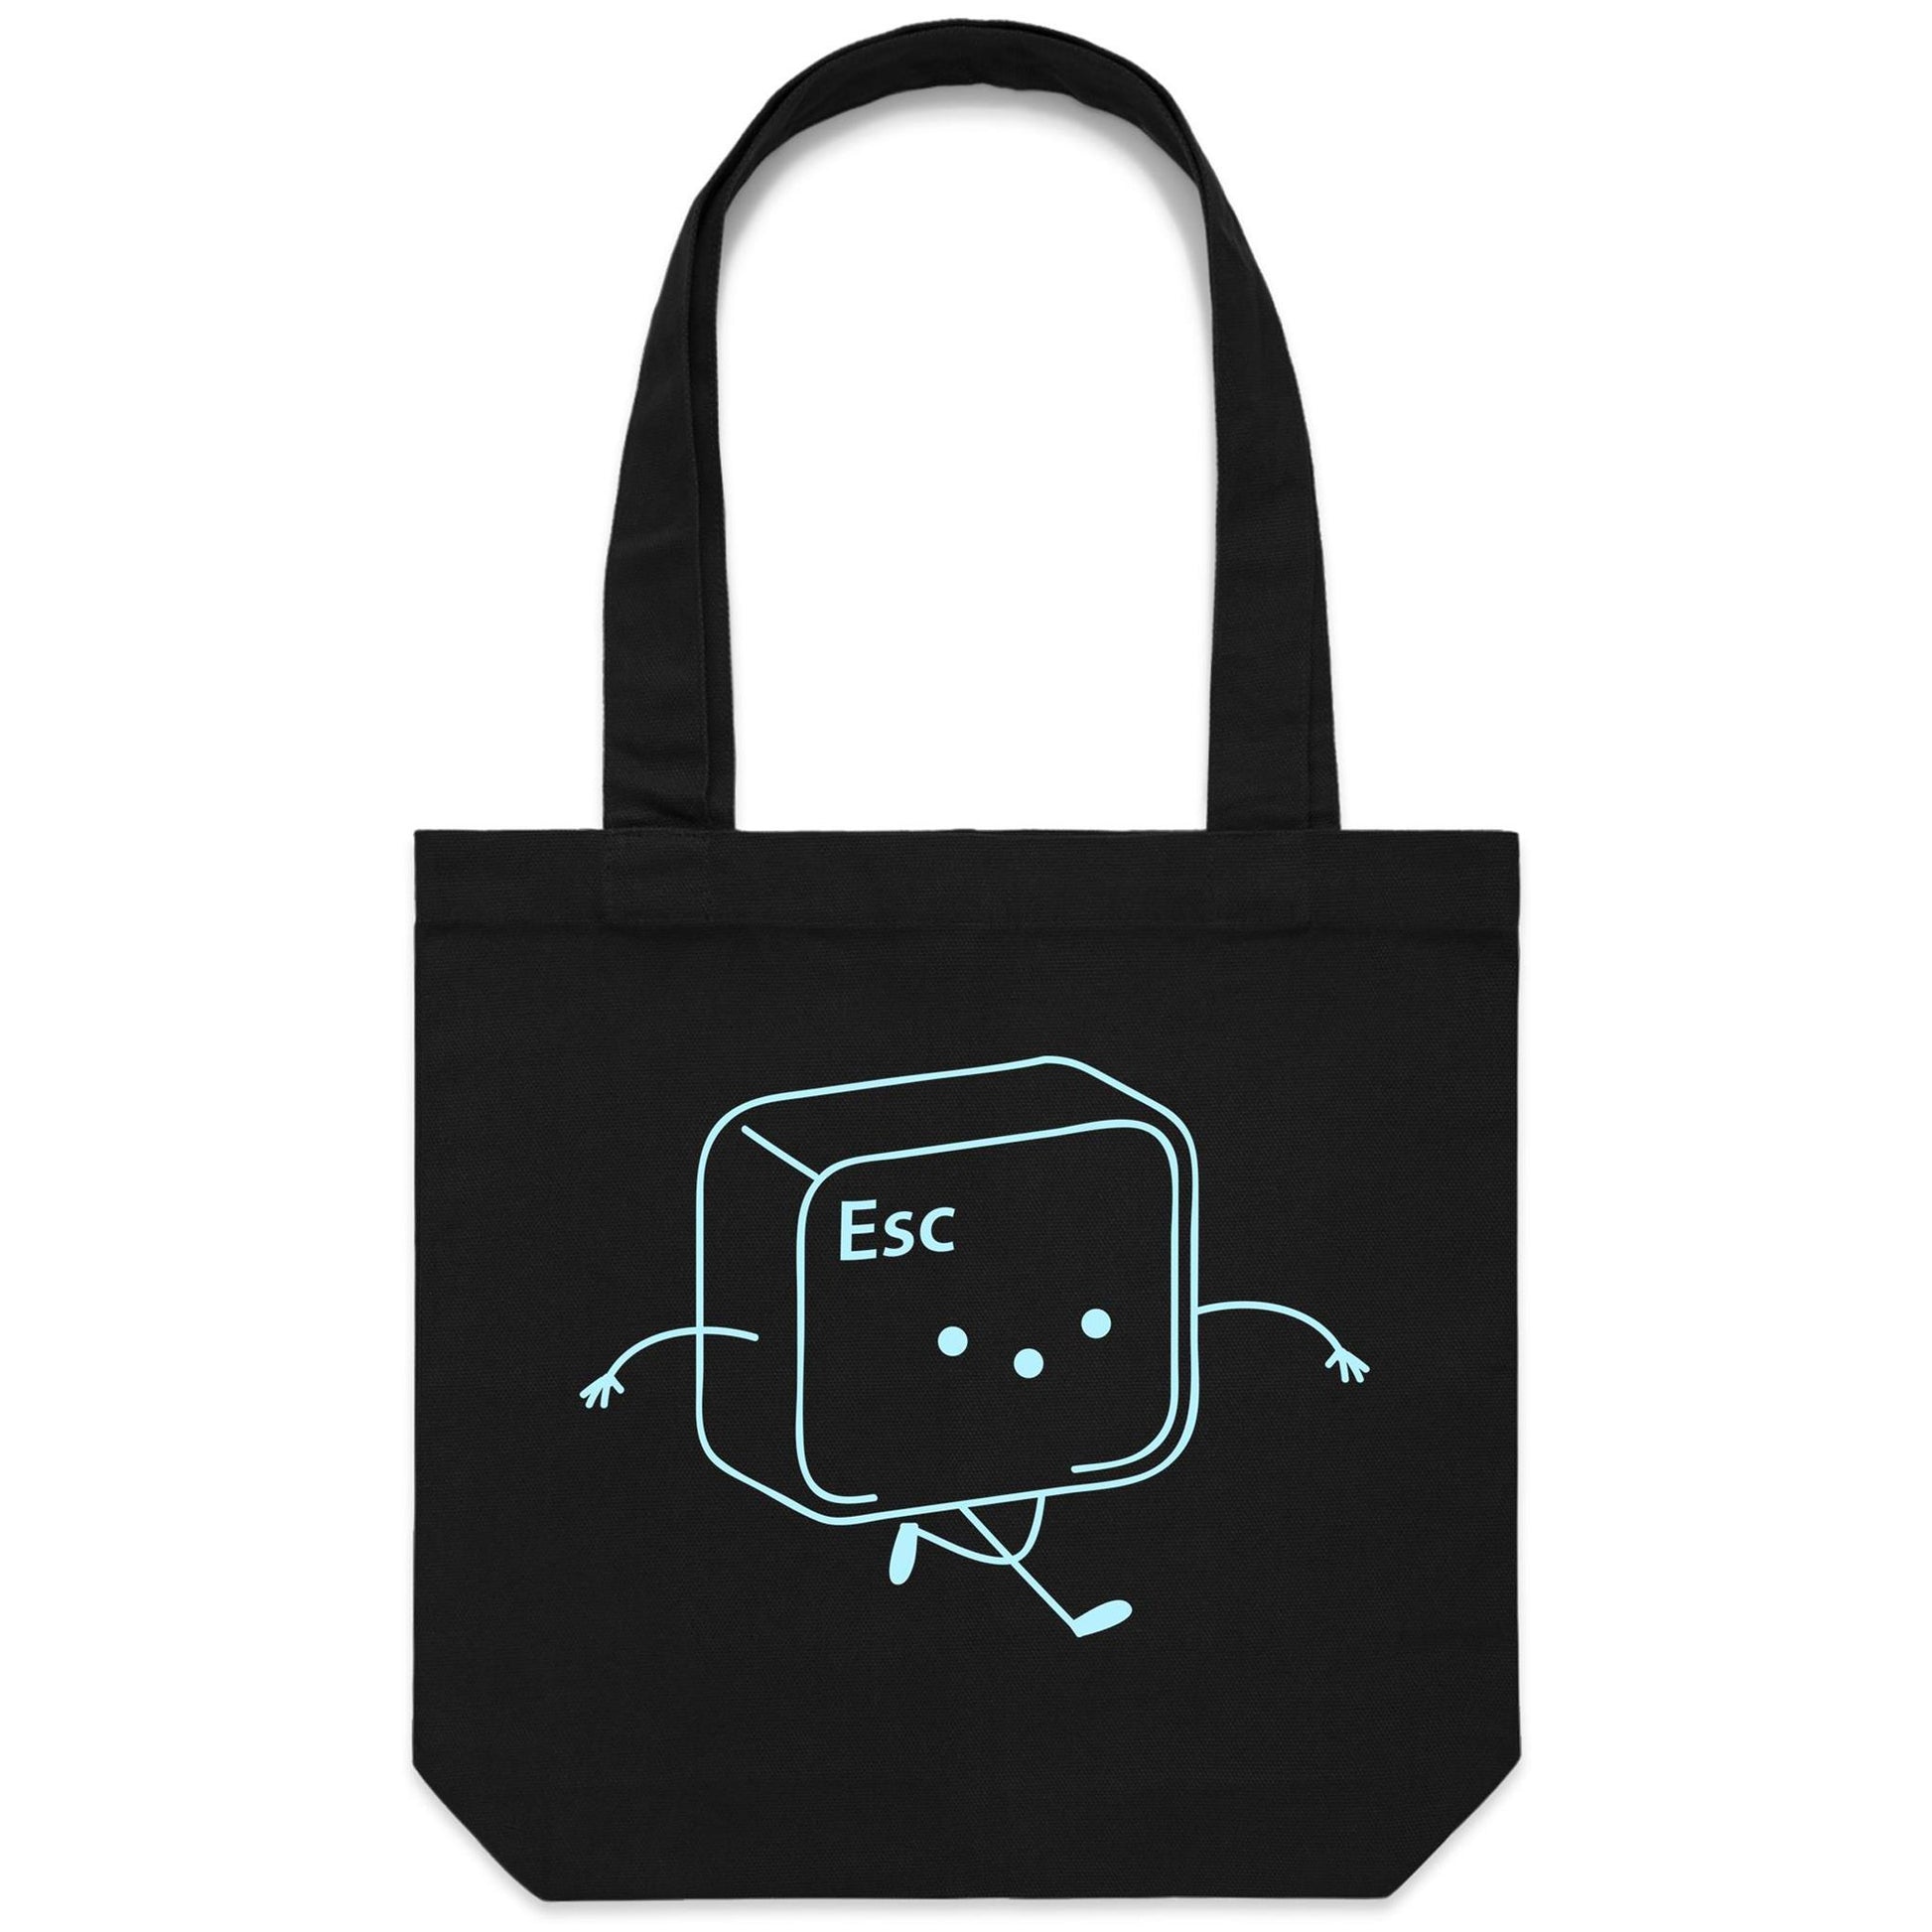 Esc, Escape Key - Canvas Tote Bag Black One Size Tote Bag Tech